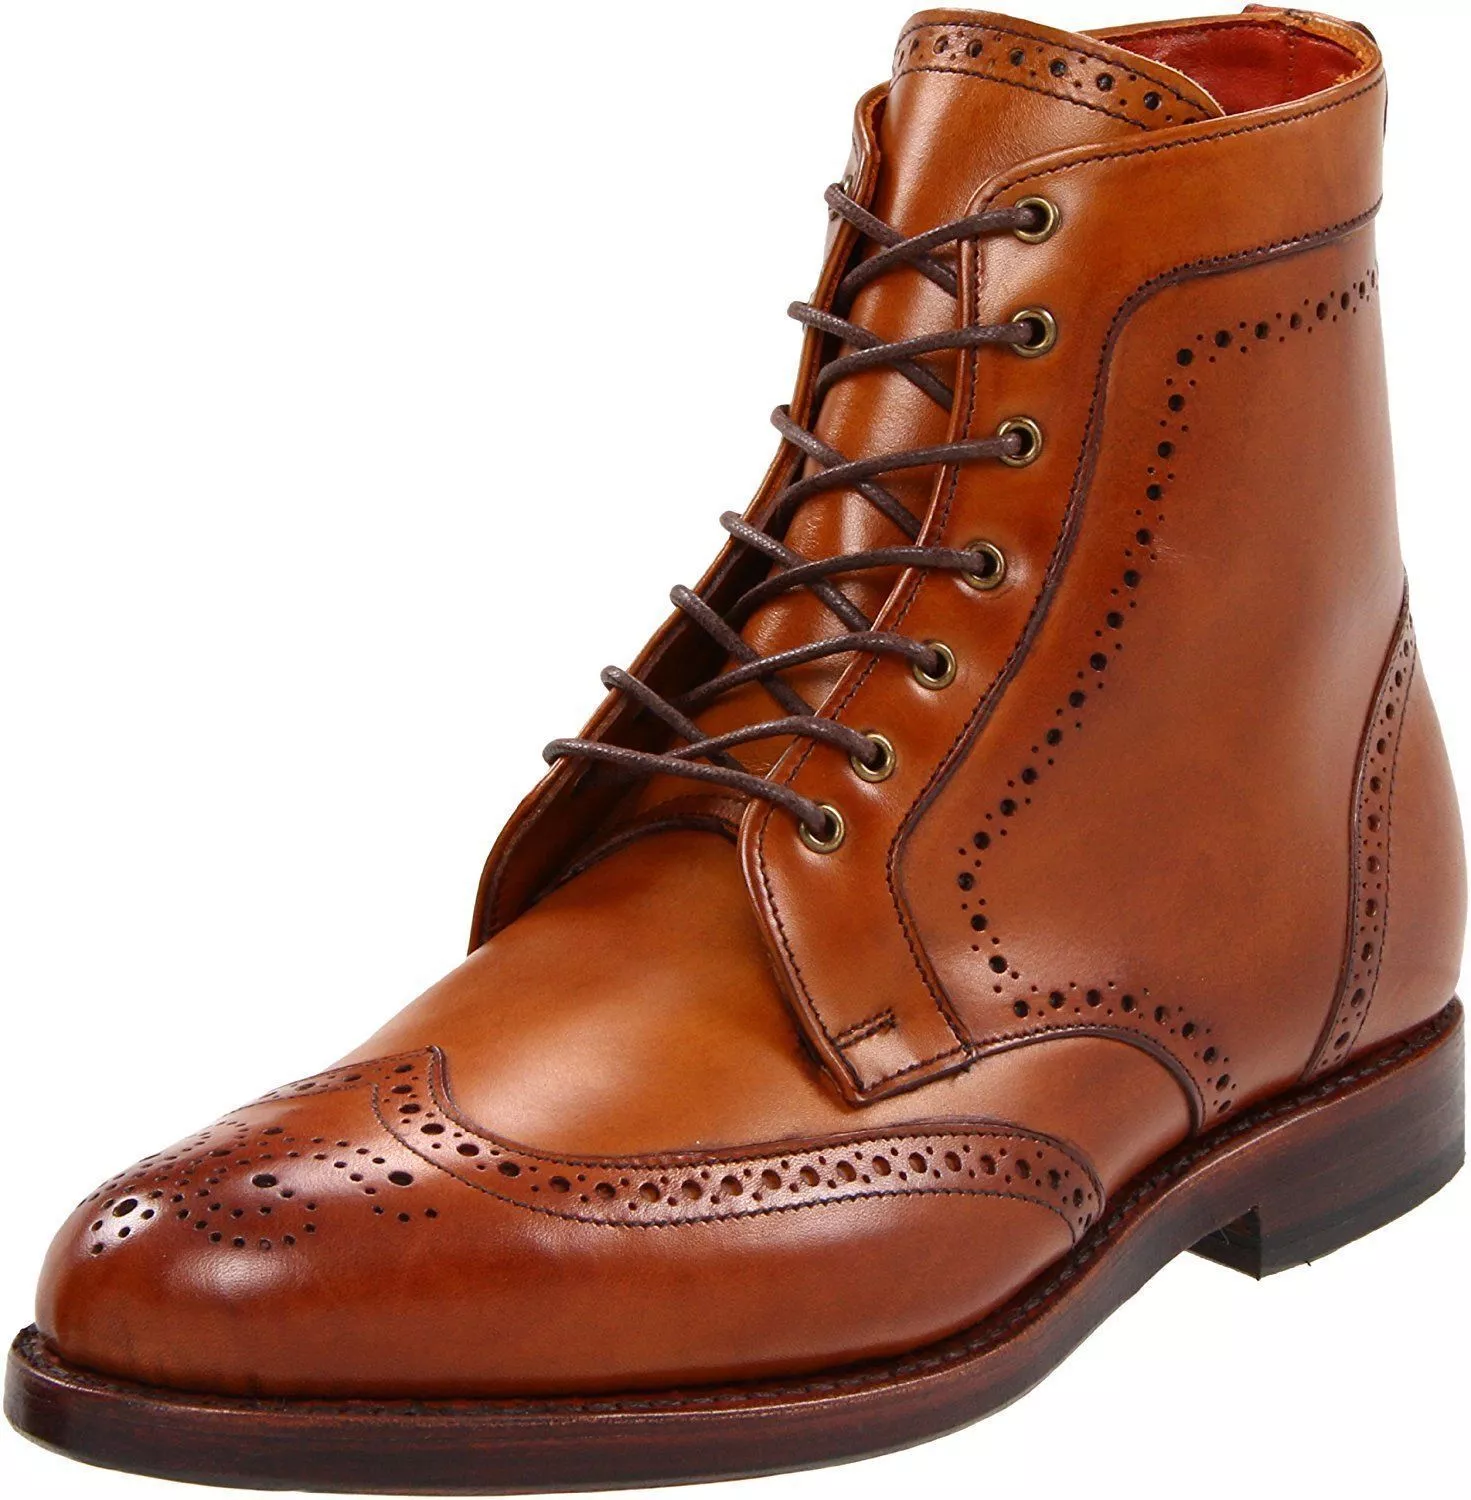 Men Tan brown wingtip brogue boots, Men lace up ankle boots, Boots for men - $179.99